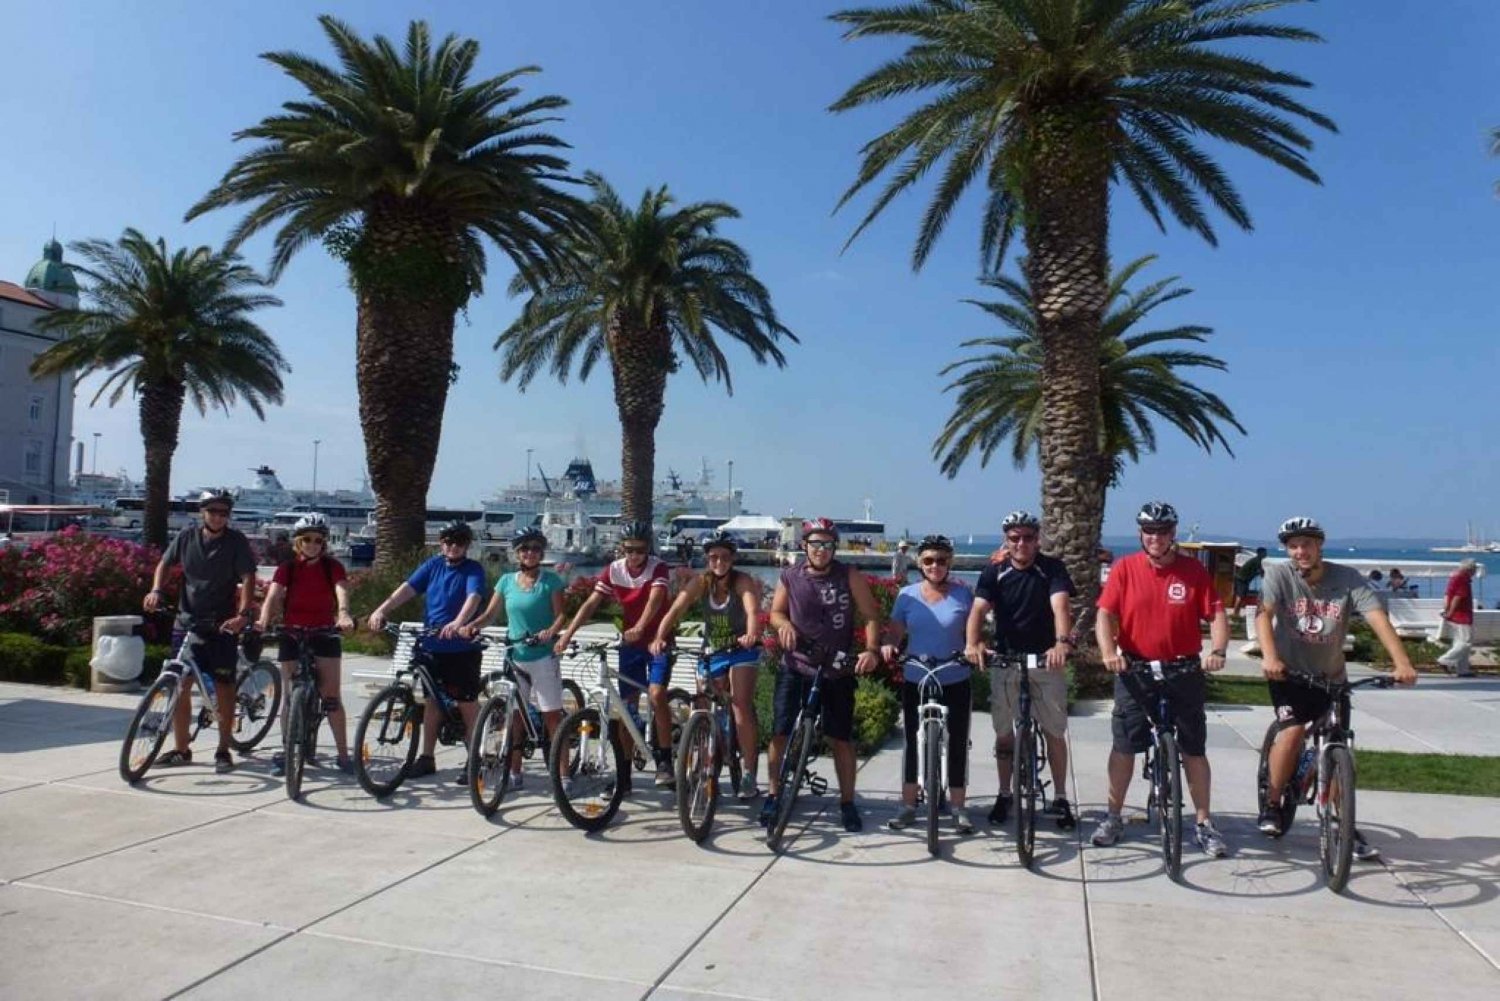 Excursión guiada en bicicleta de 3 horas por Split